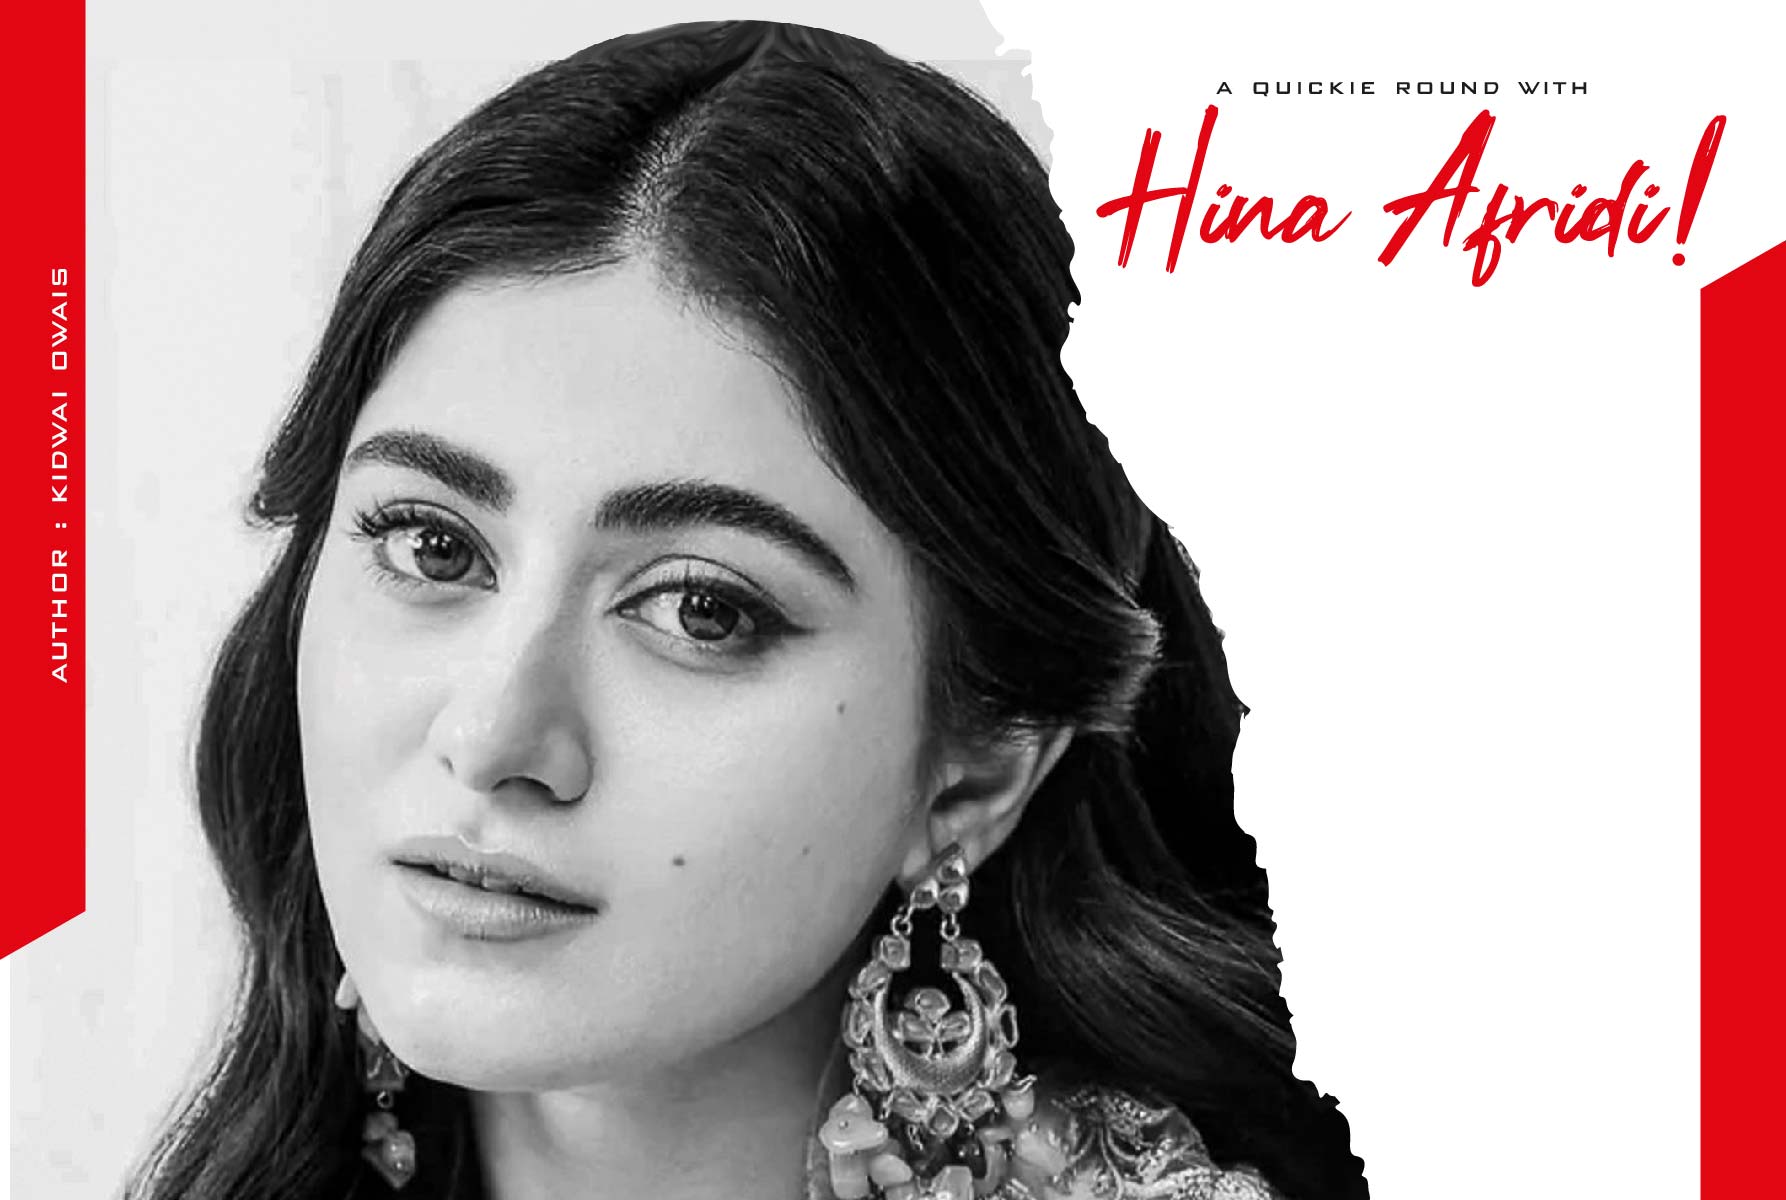 Hina Afridi interview